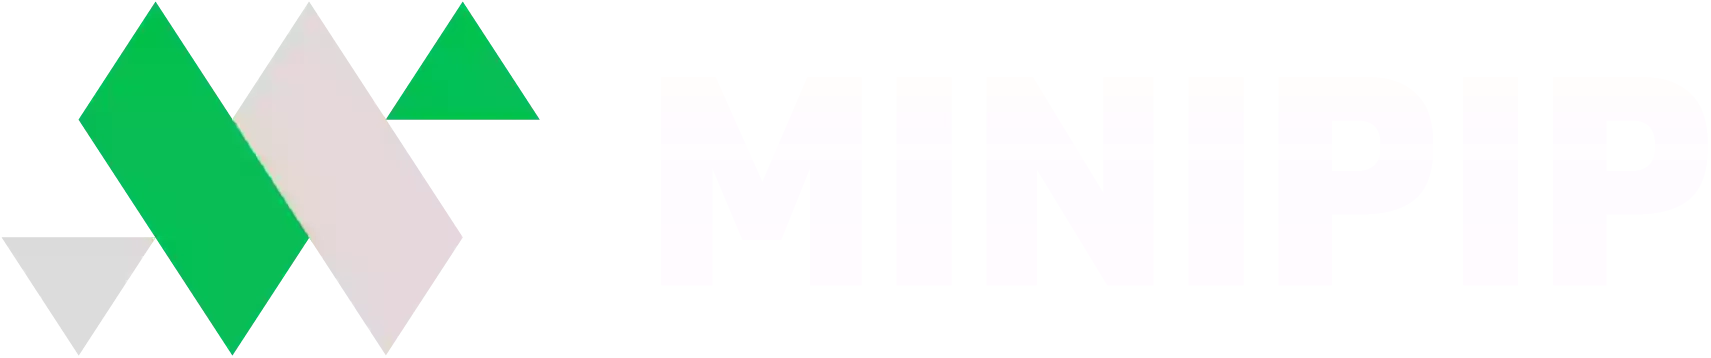 Minipip